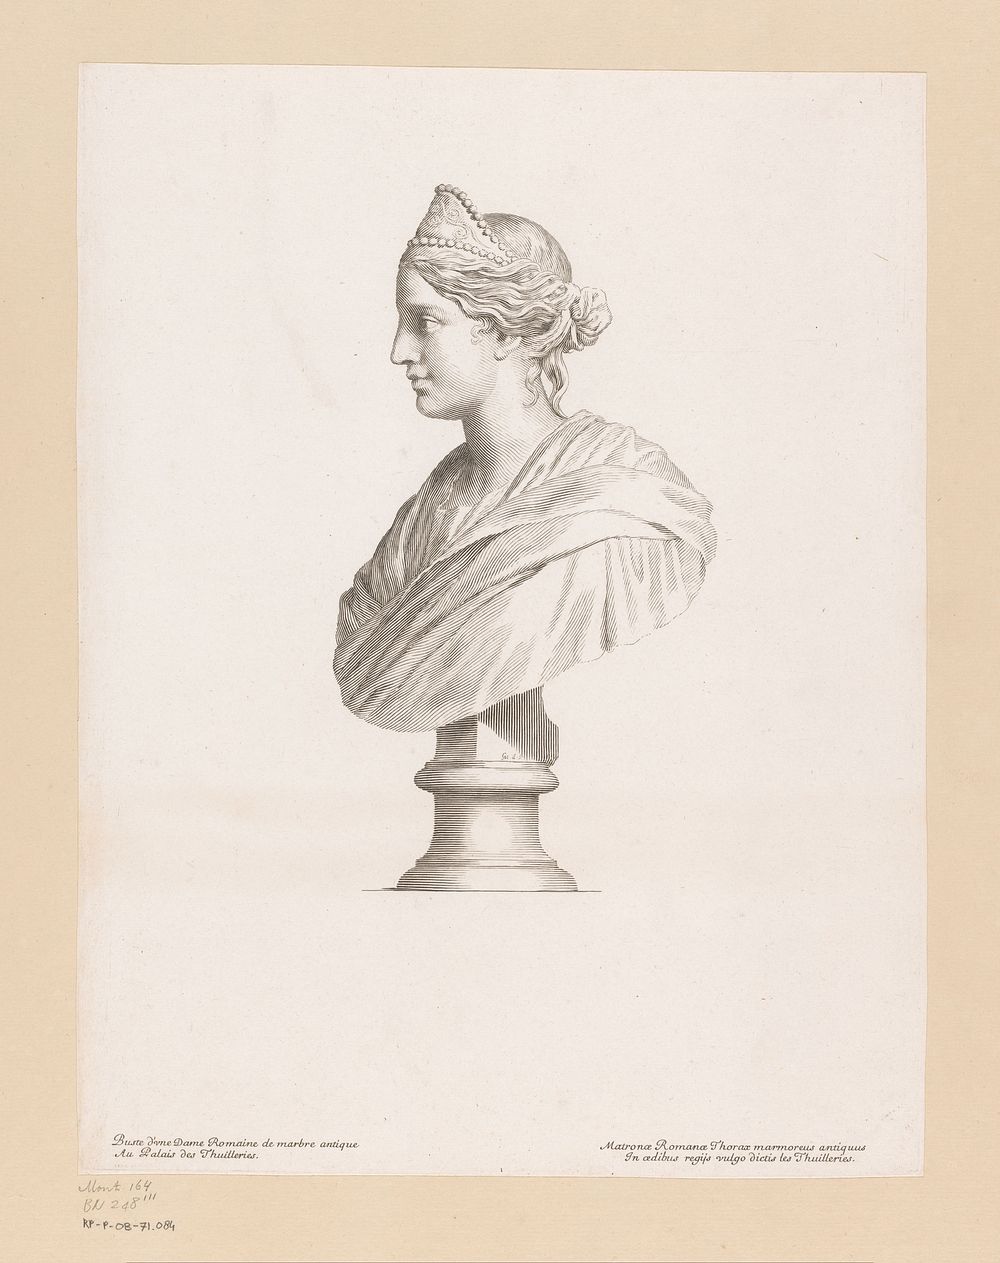 Buste van een Romeinse dame en profile (1608 - 1677) by Claude Mellan, Claude Mellan, Imprimerie Royale and Imprimerie Royale